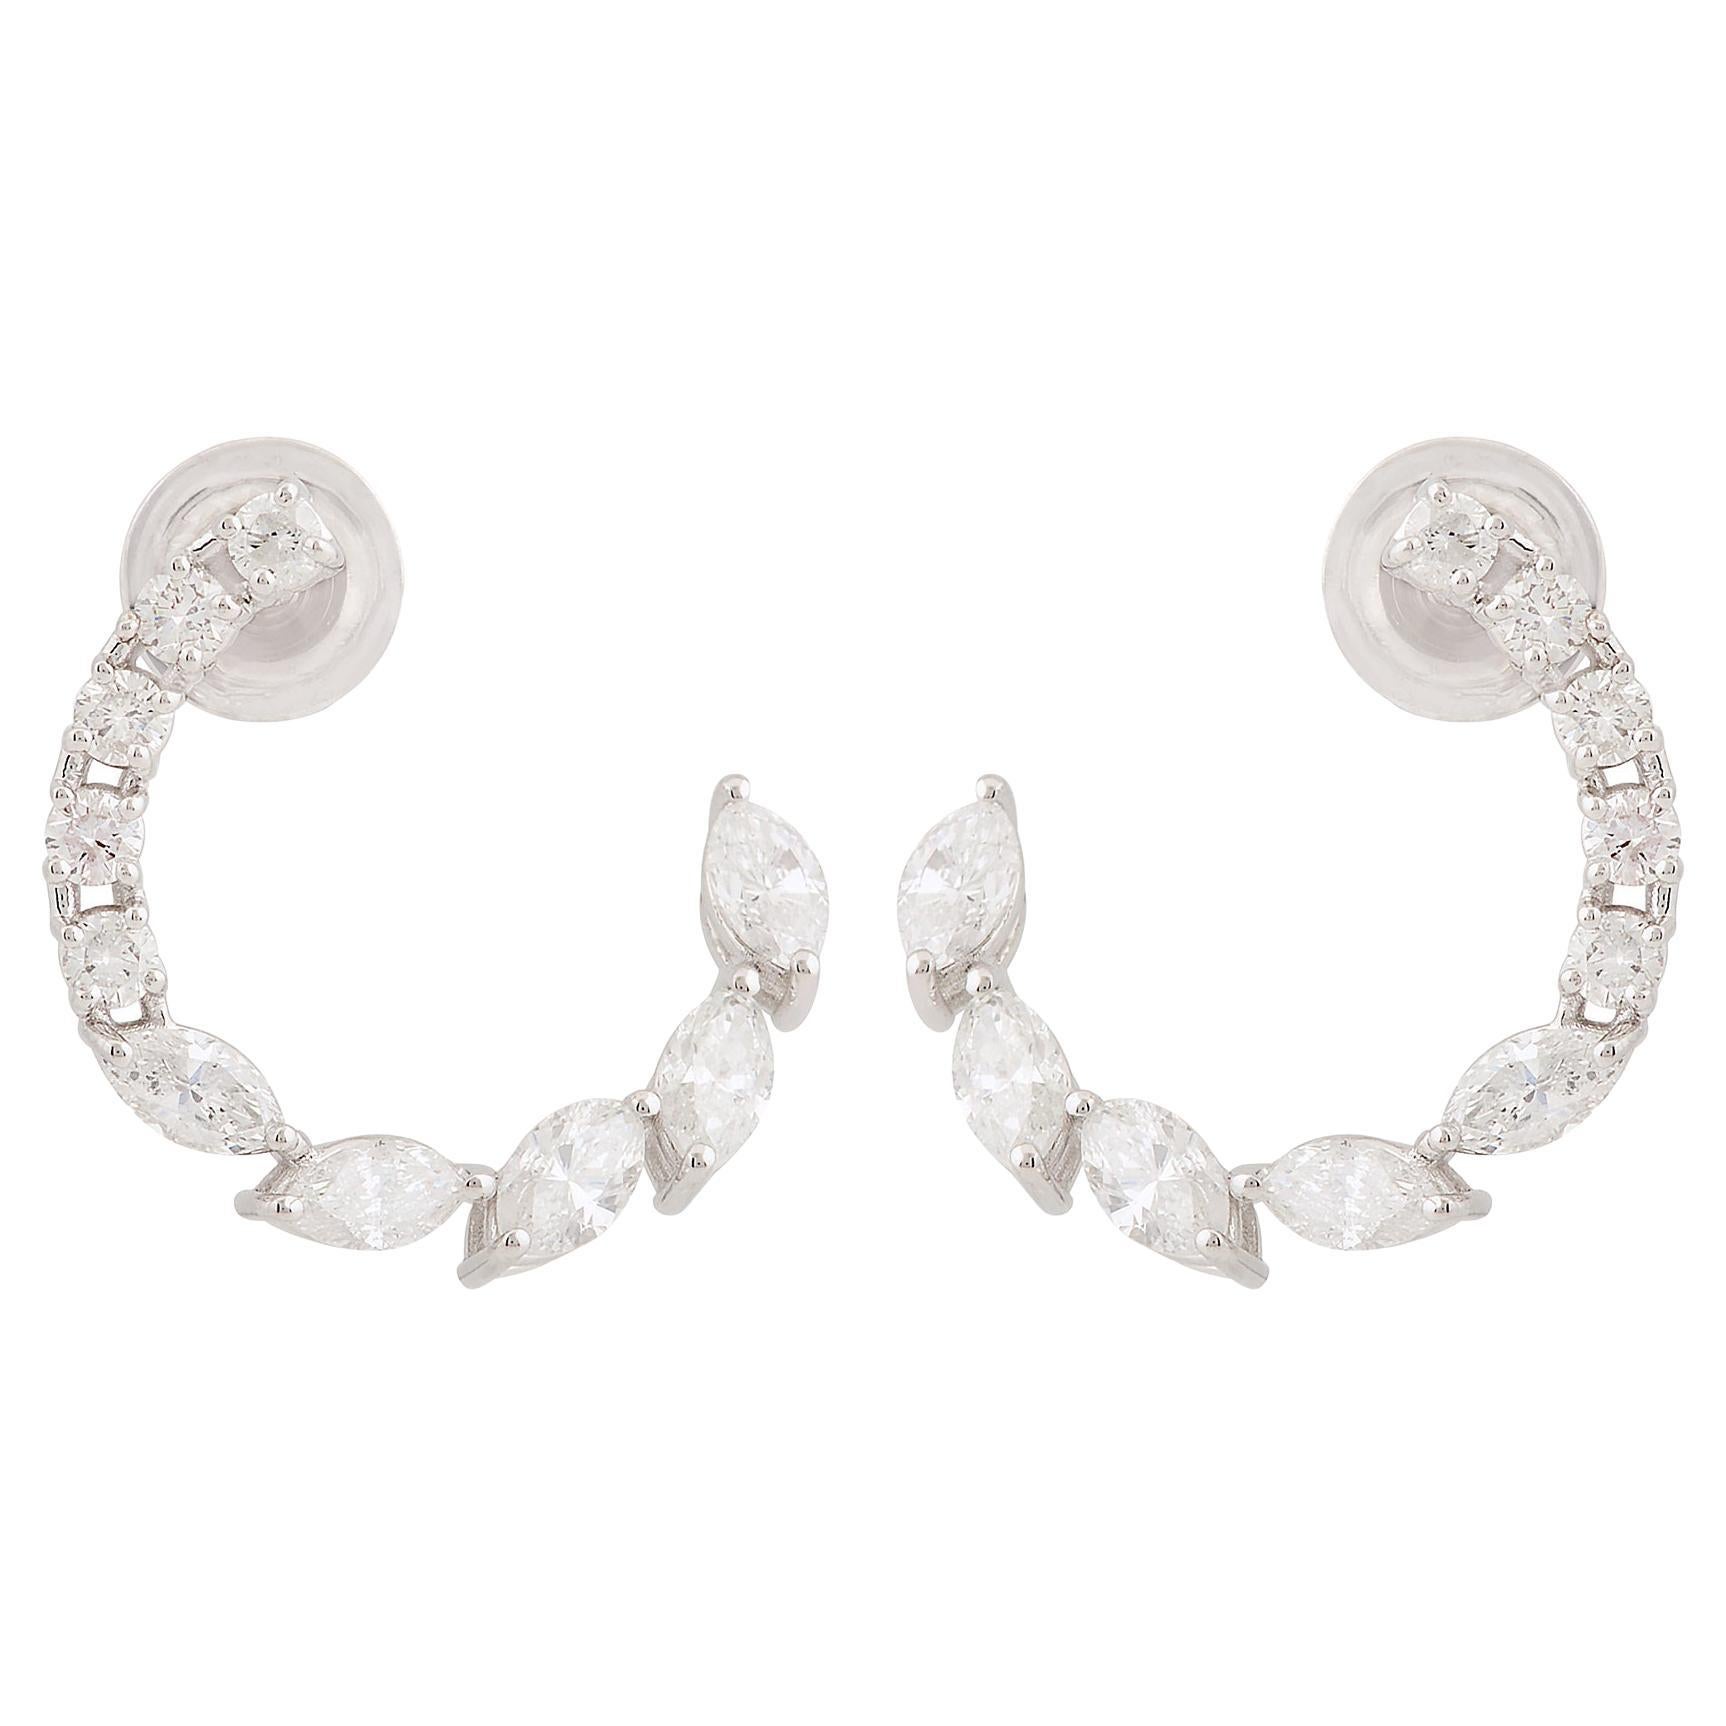 Real 2.49 Carat Marquise Diamond Stud Earrings 14k White Gold Handmade Jewelry